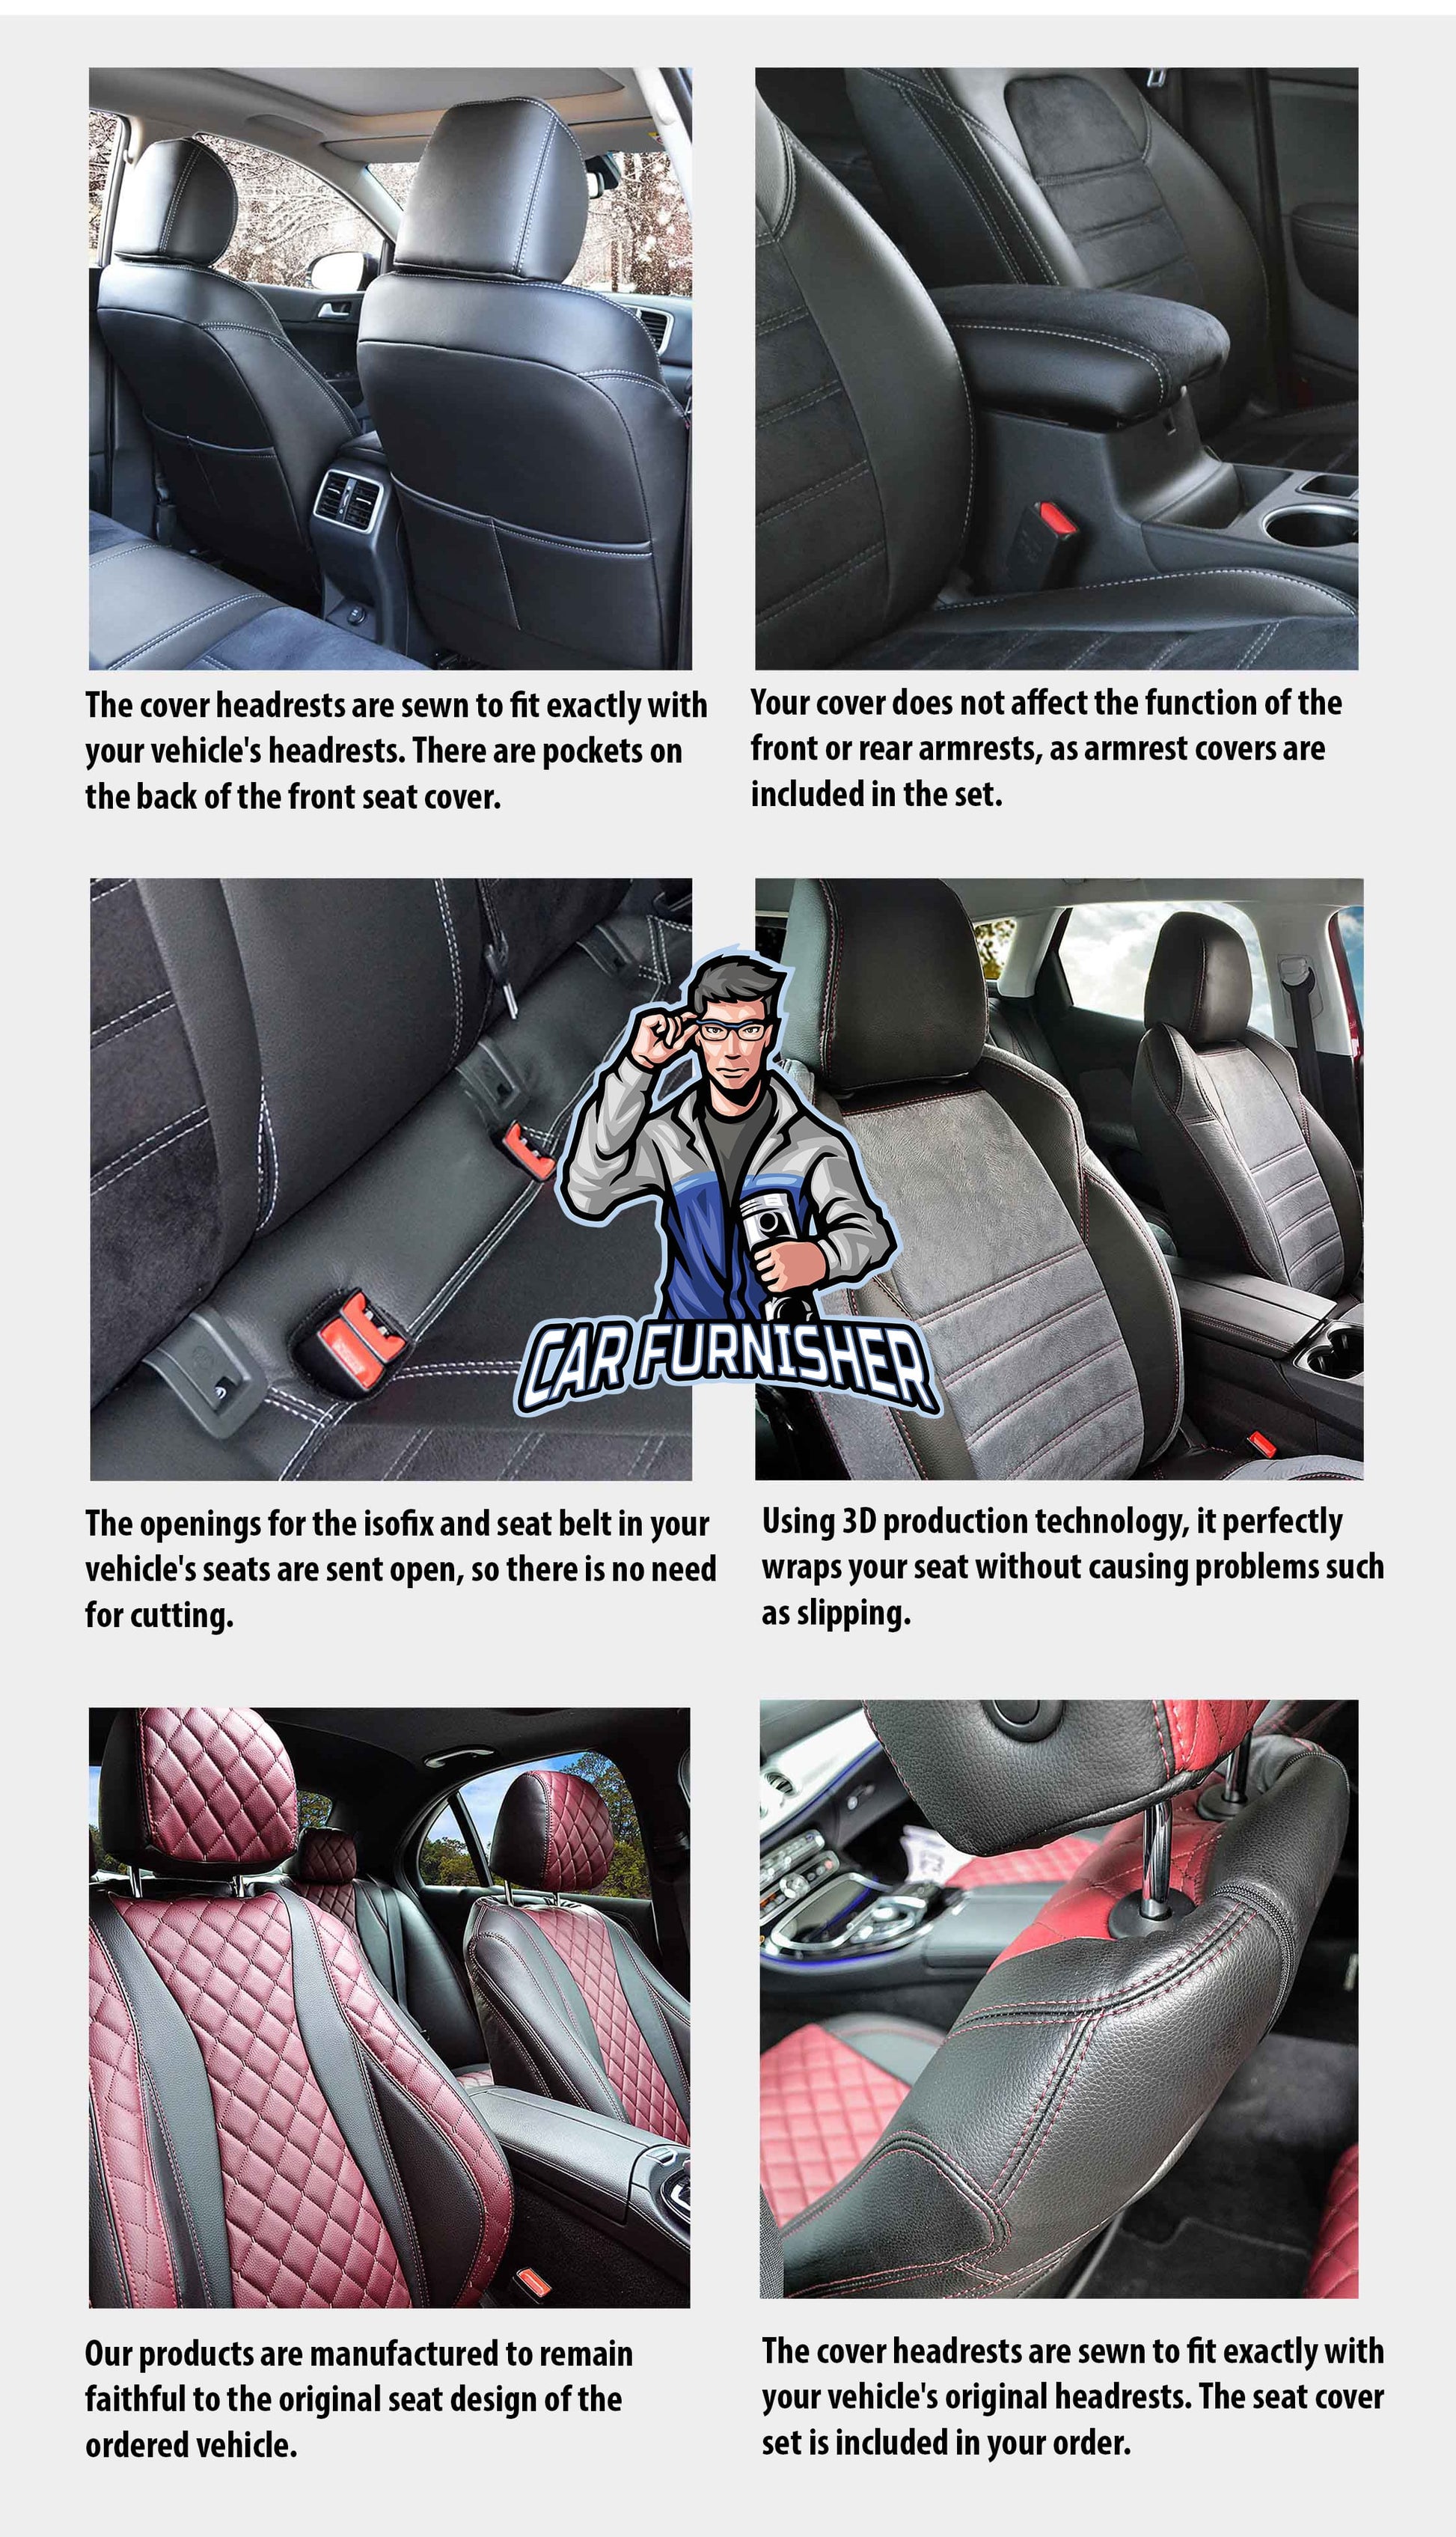 Kia XCeed Seat Covers Amsterdam Leather Design Dark Gray Leather